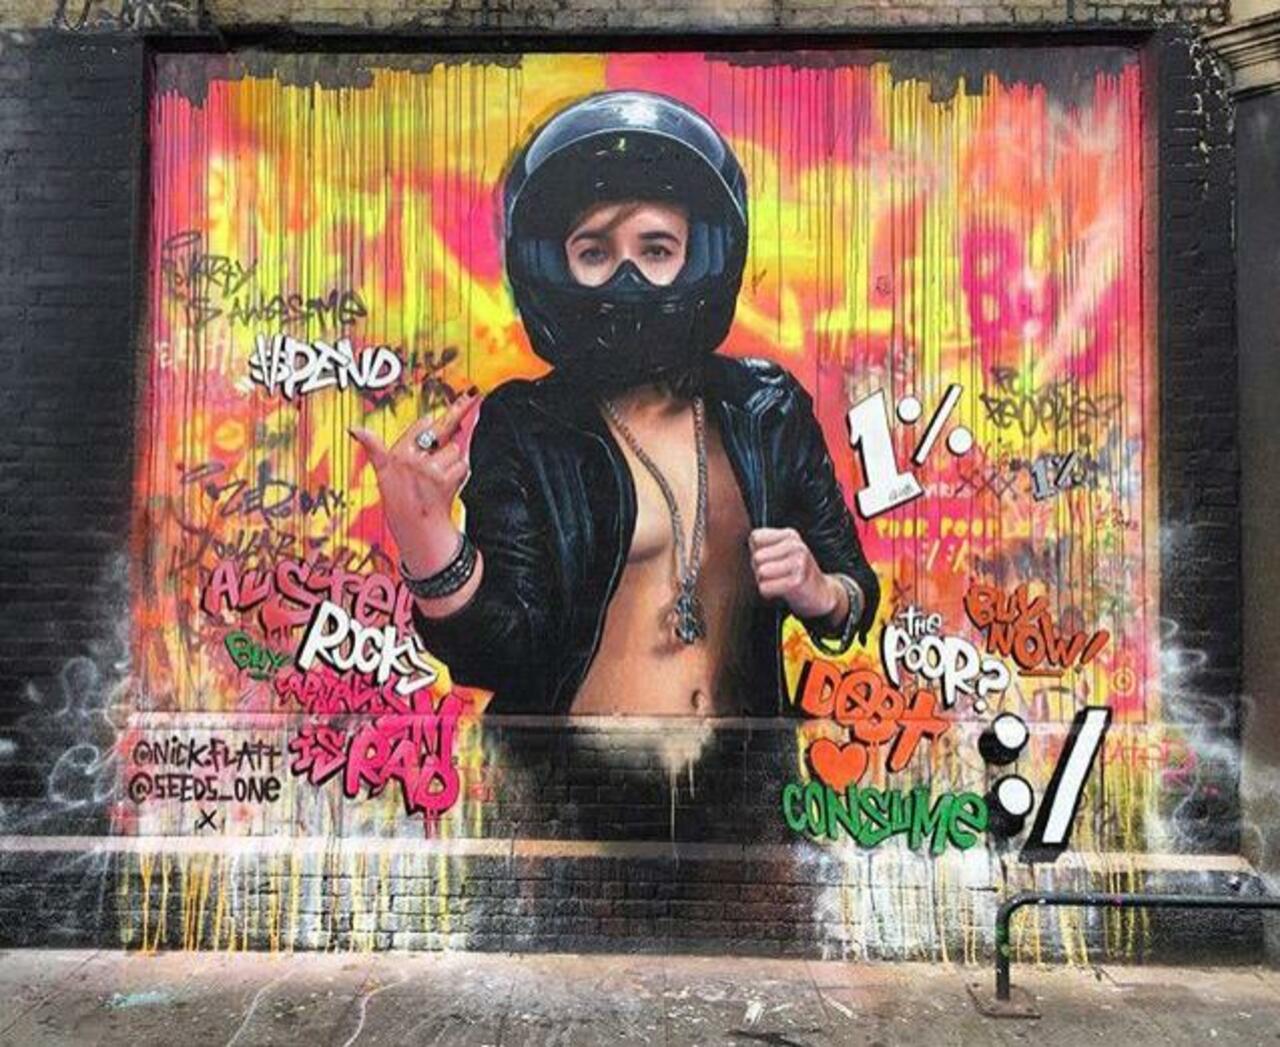 New Street Art collab by Nick Flatt &  Seeds One in London 

#art #graffiti #mural #streetart http://t.co/GRg3iEVKAU